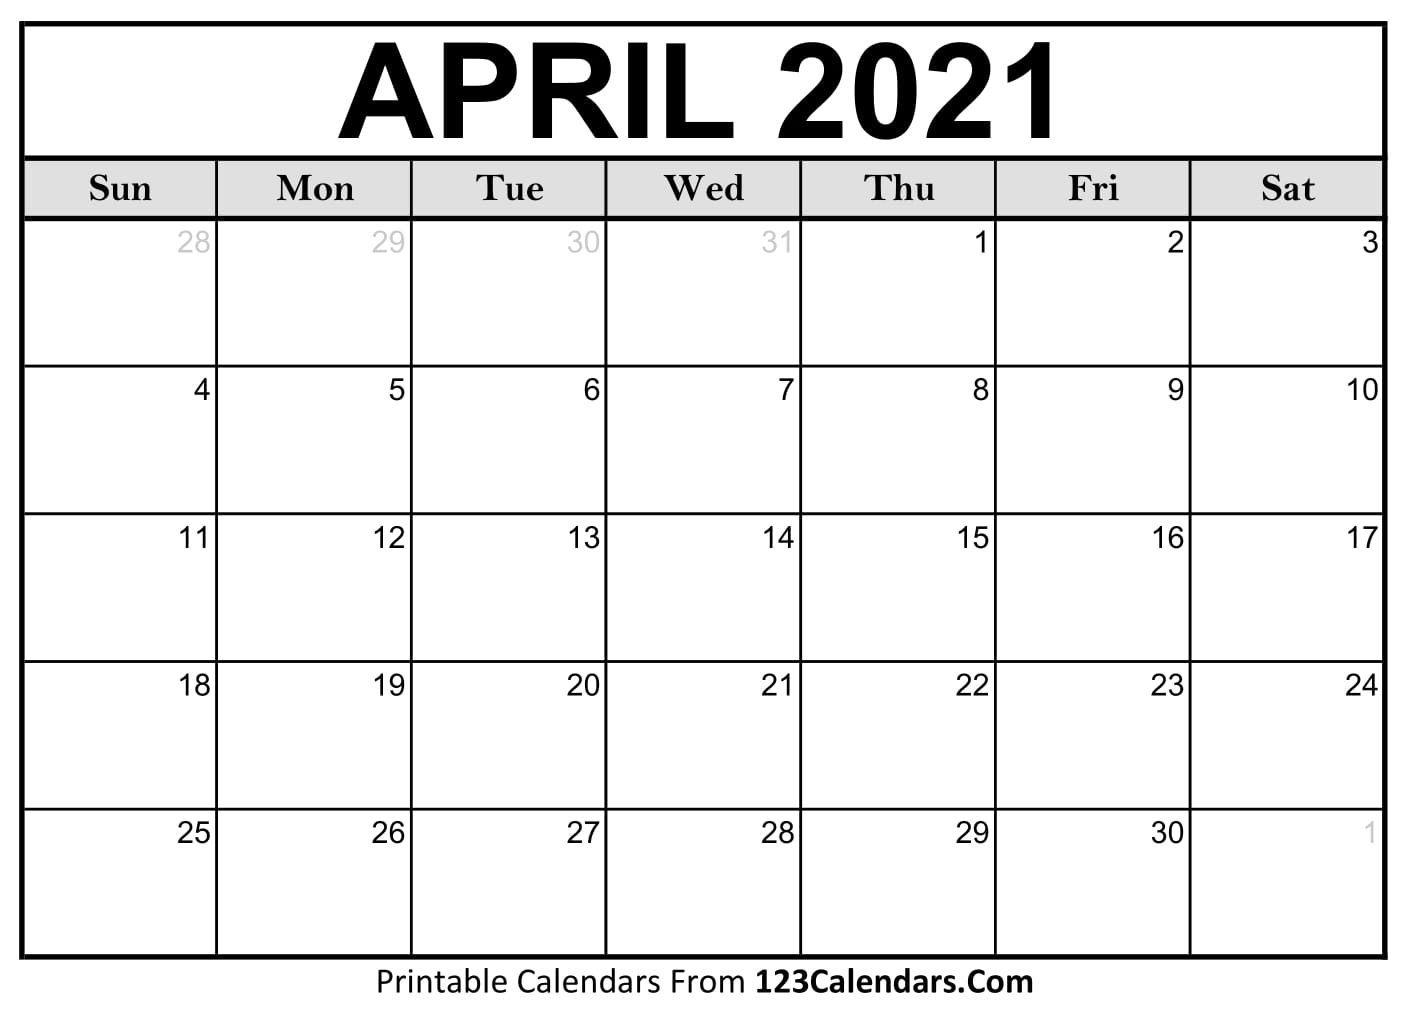 Printable April 2021 Calendar Templates | 123Calendars